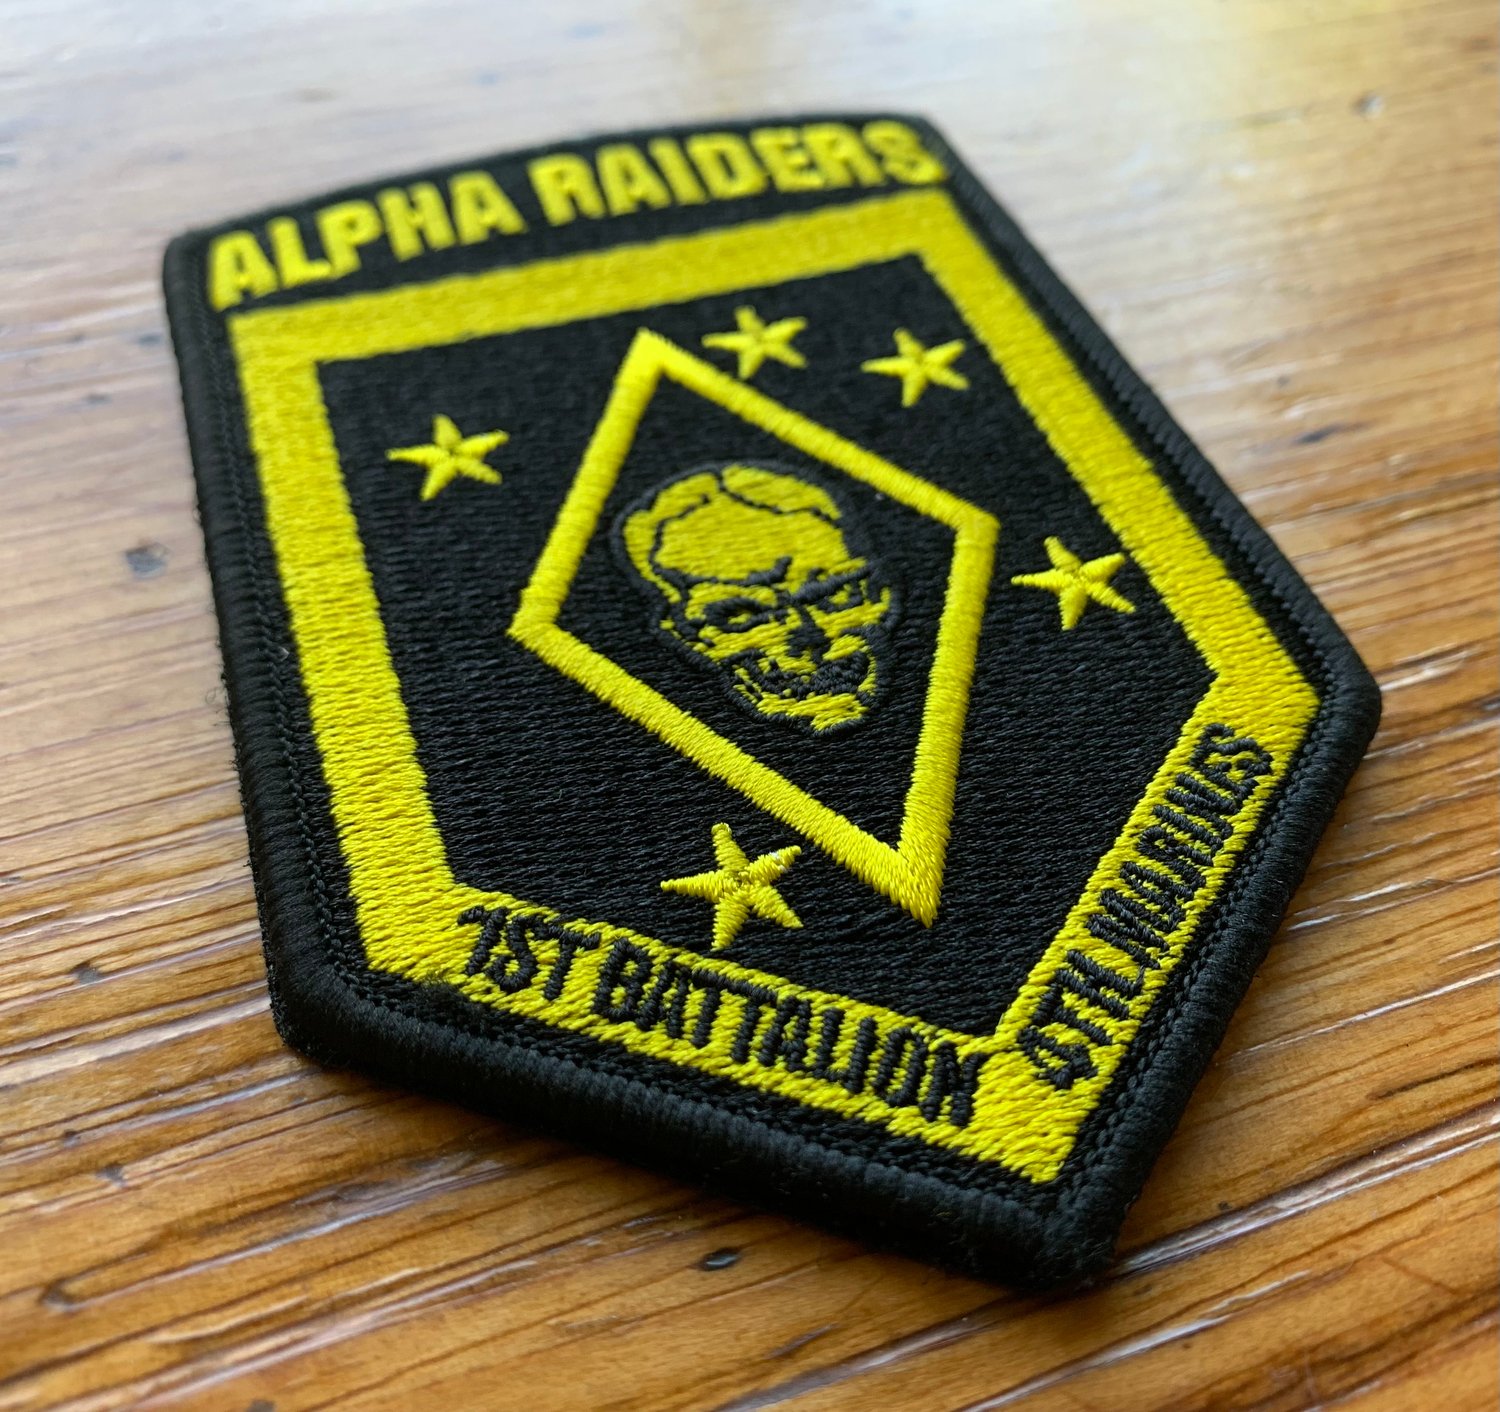 Alpha Raiders Patch